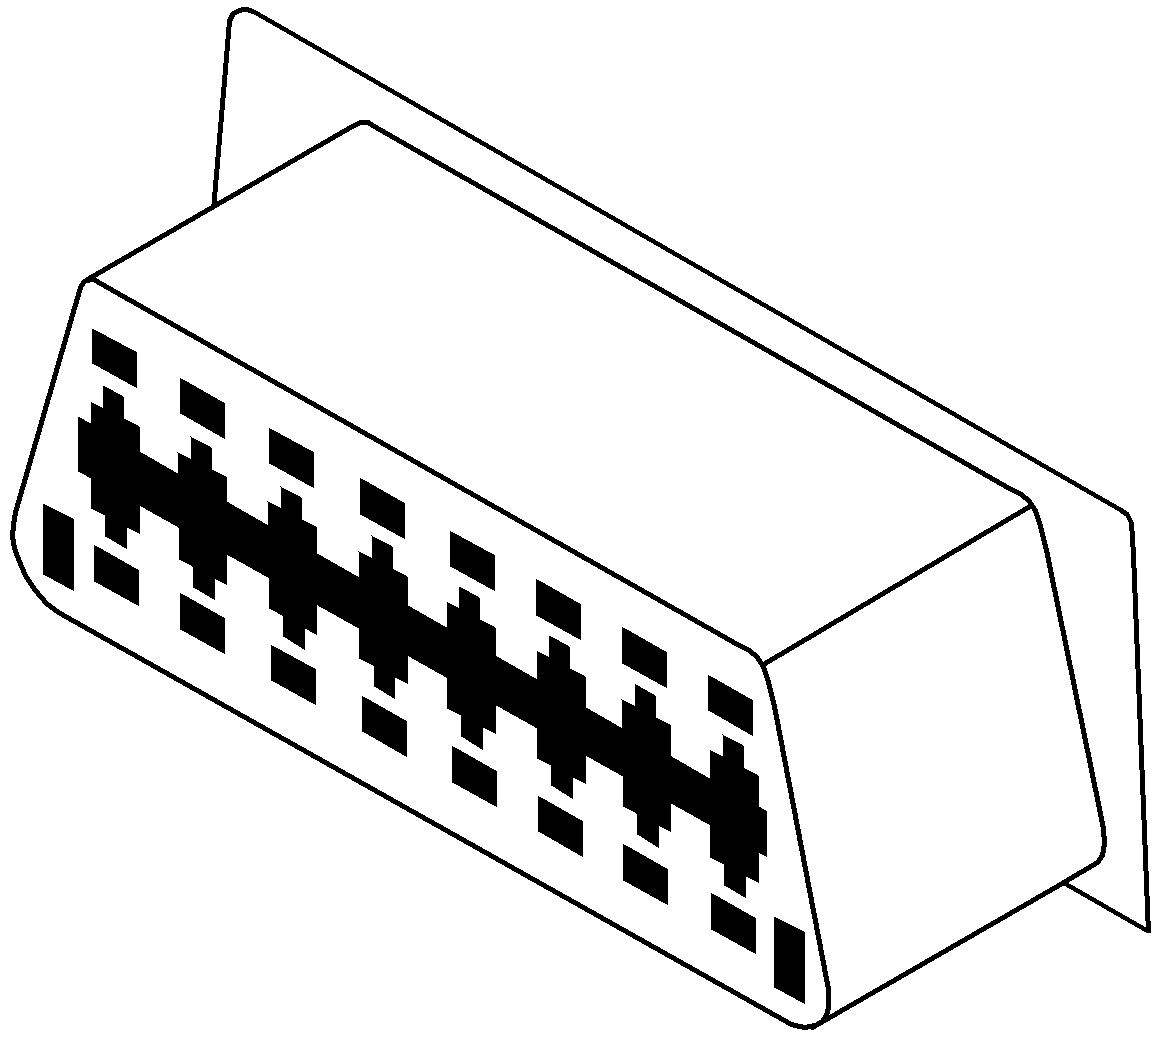 OBD2 connector